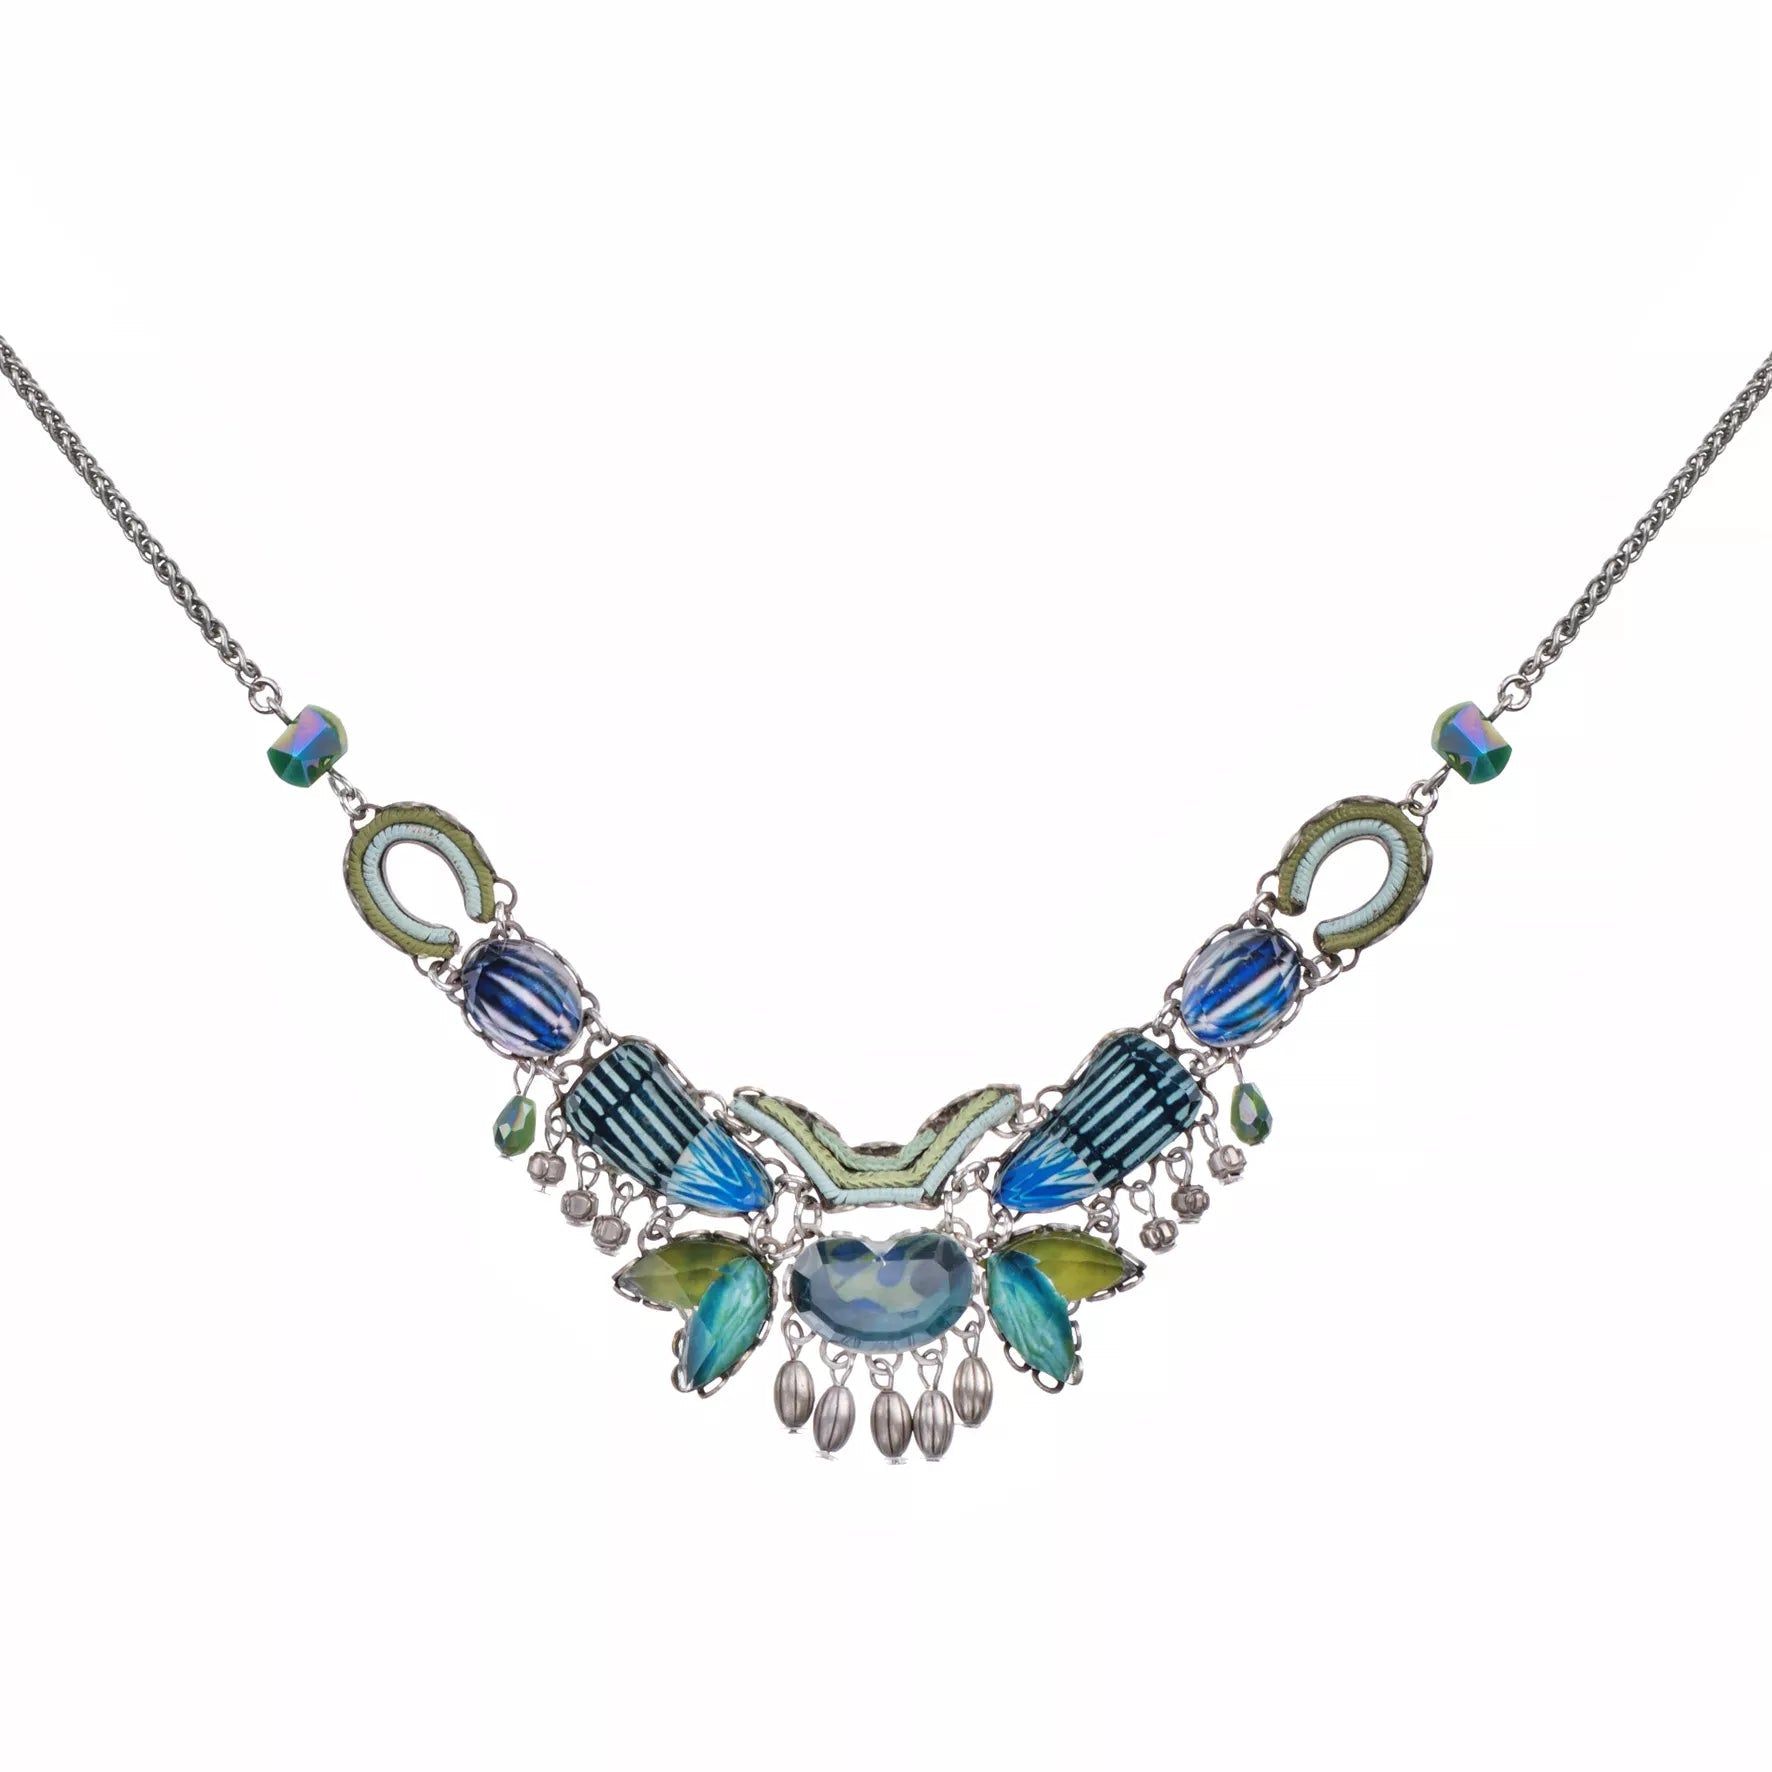 Crisp Air Ula Necklace - The Nancy Smillie Shop - Art, Jewellery & Designer Gifts Glasgow